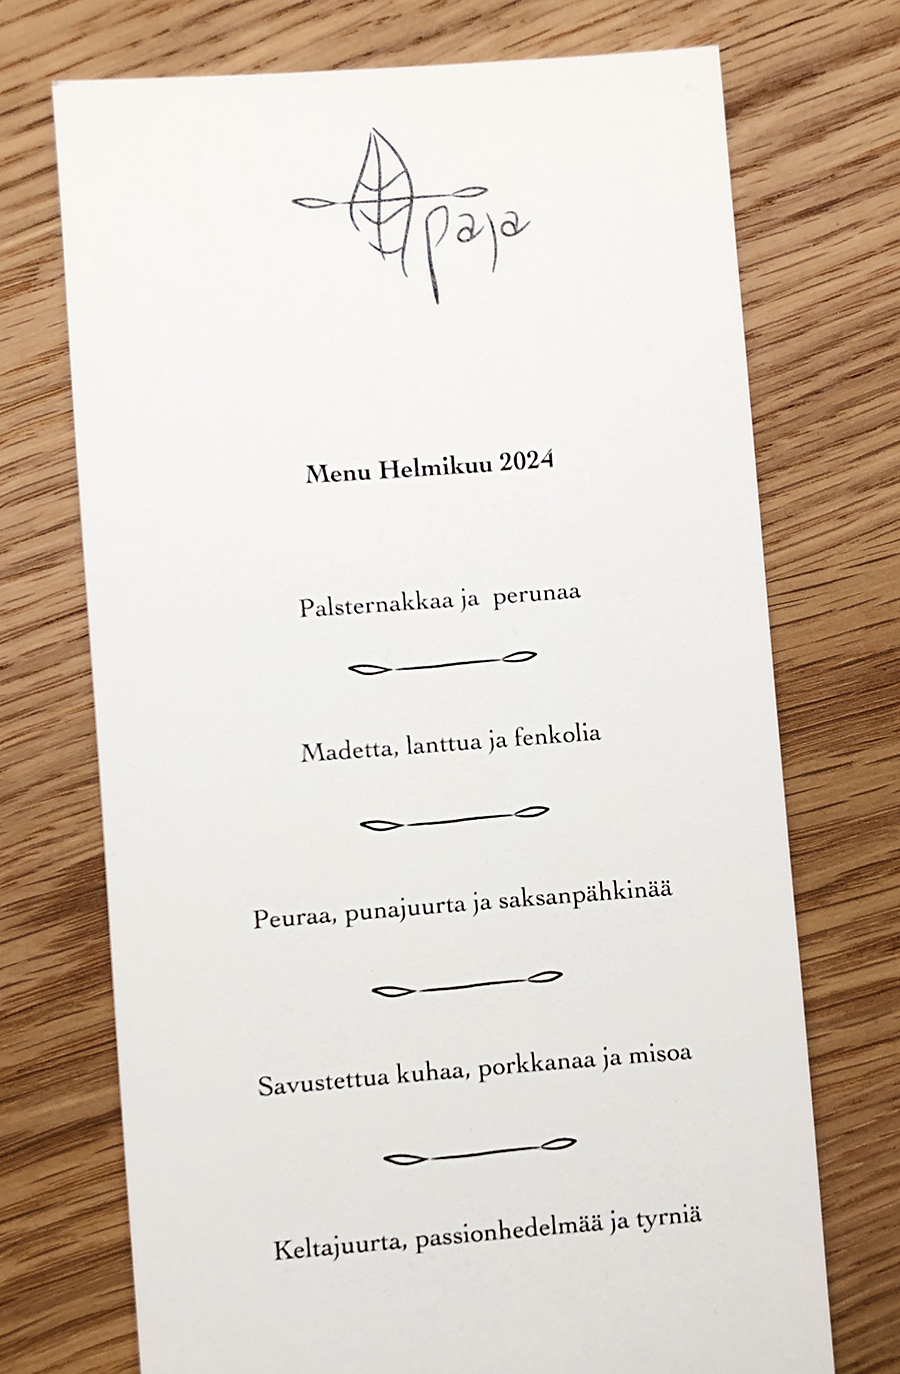 Ravintola Apaja Tampere menu